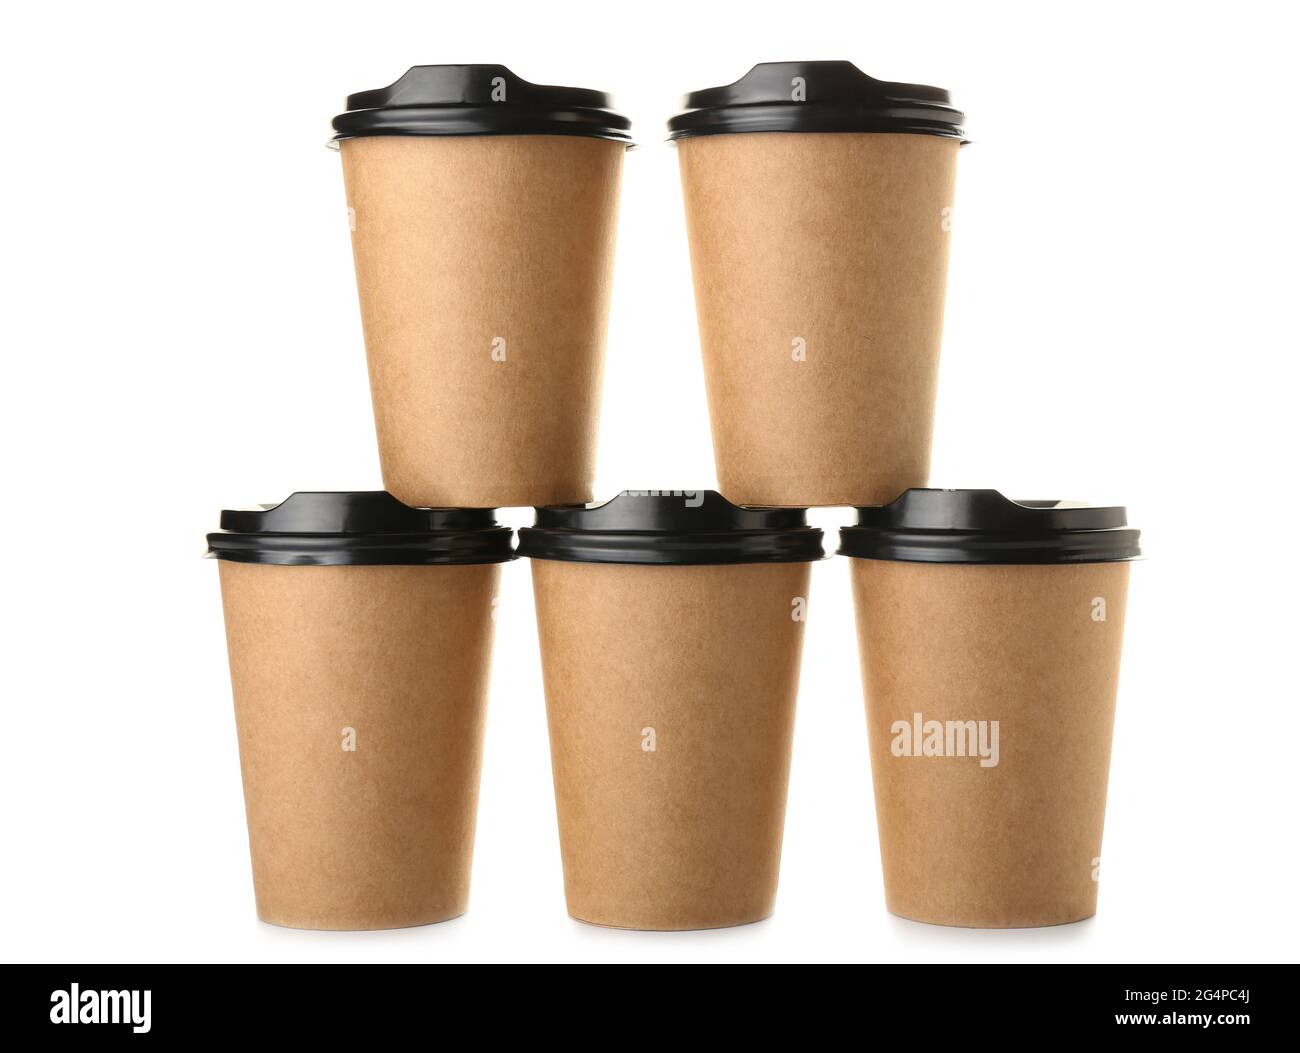 Tazzine da asporto per caffè su sfondo bianco Foto stock - Alamy